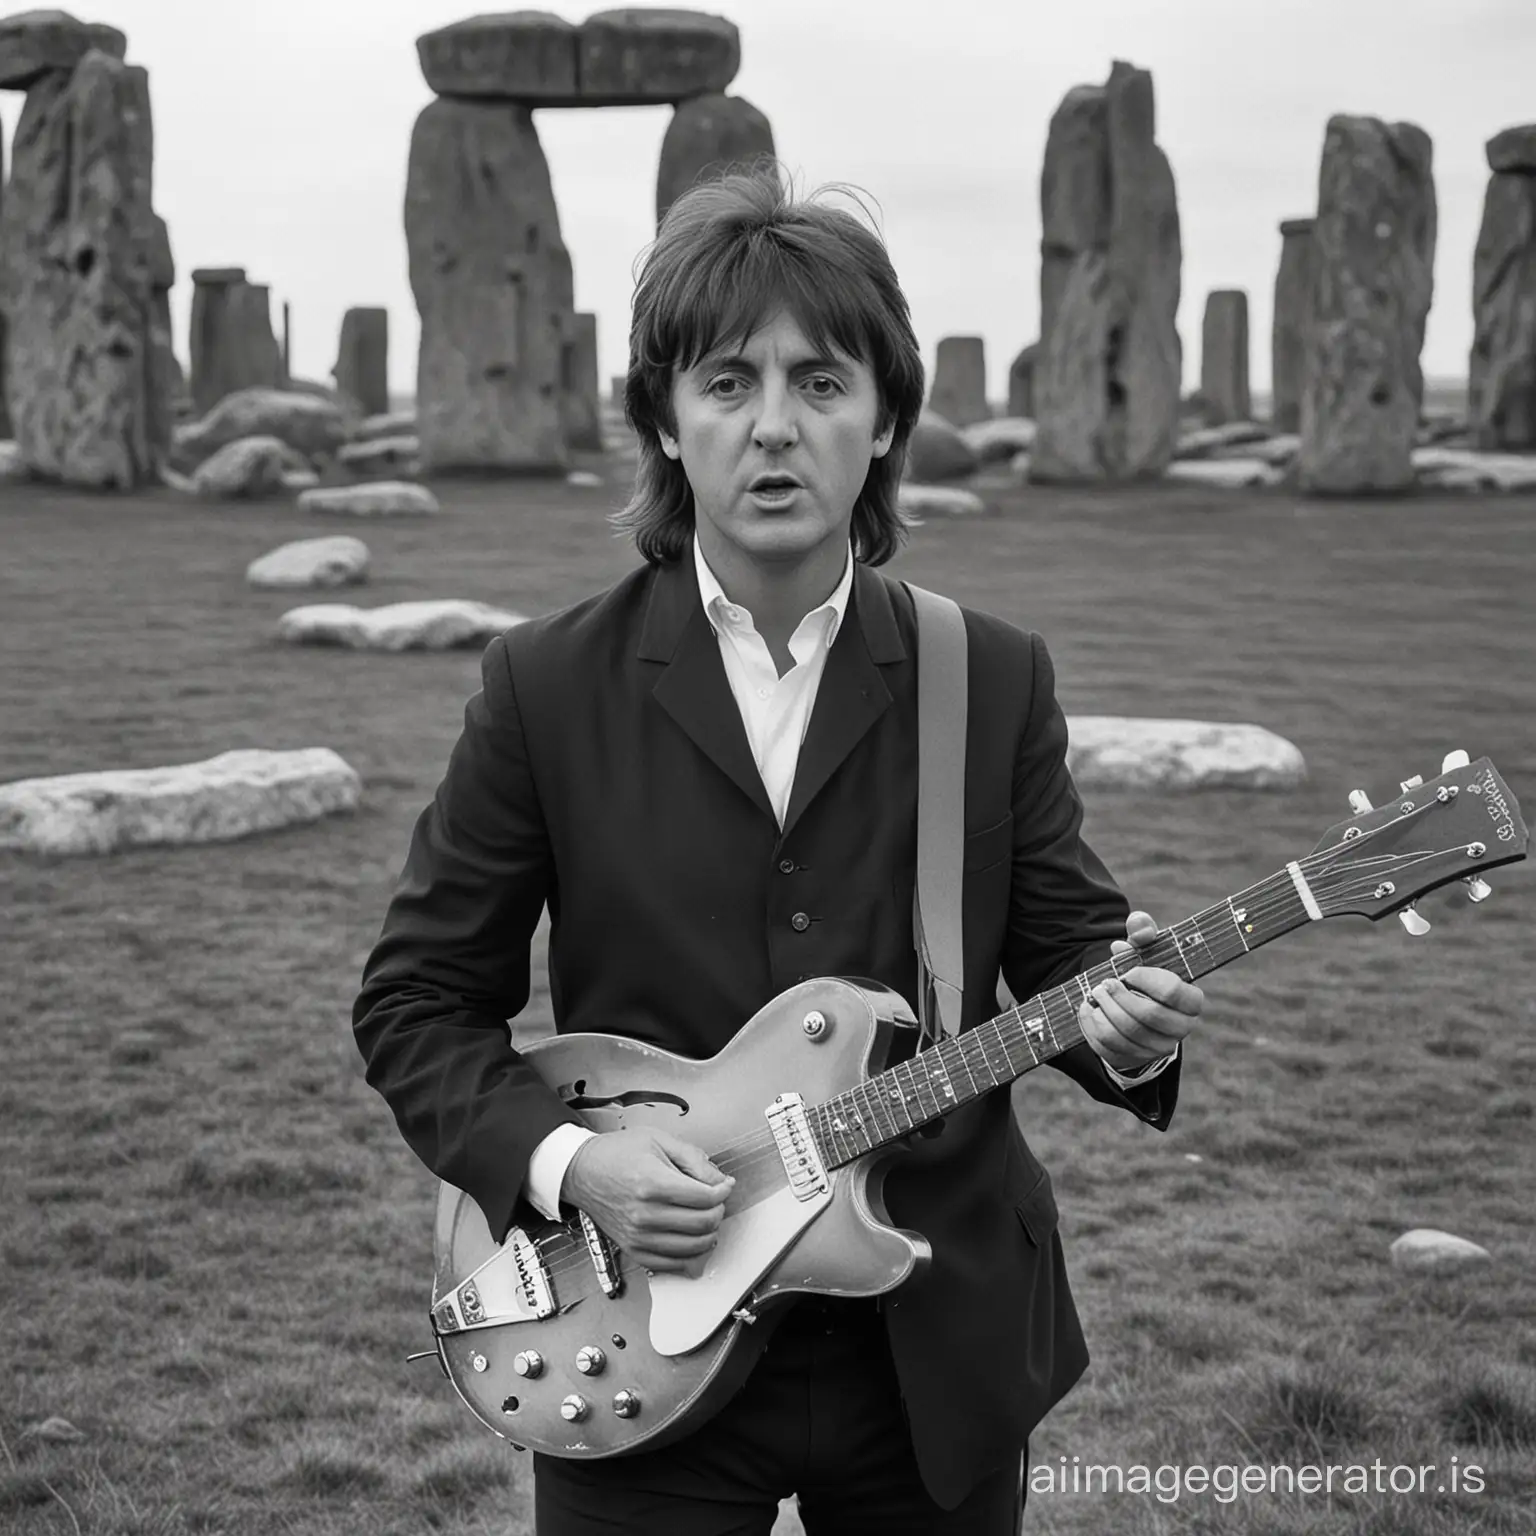 Paul McCartney playing guitar at Stonehenge